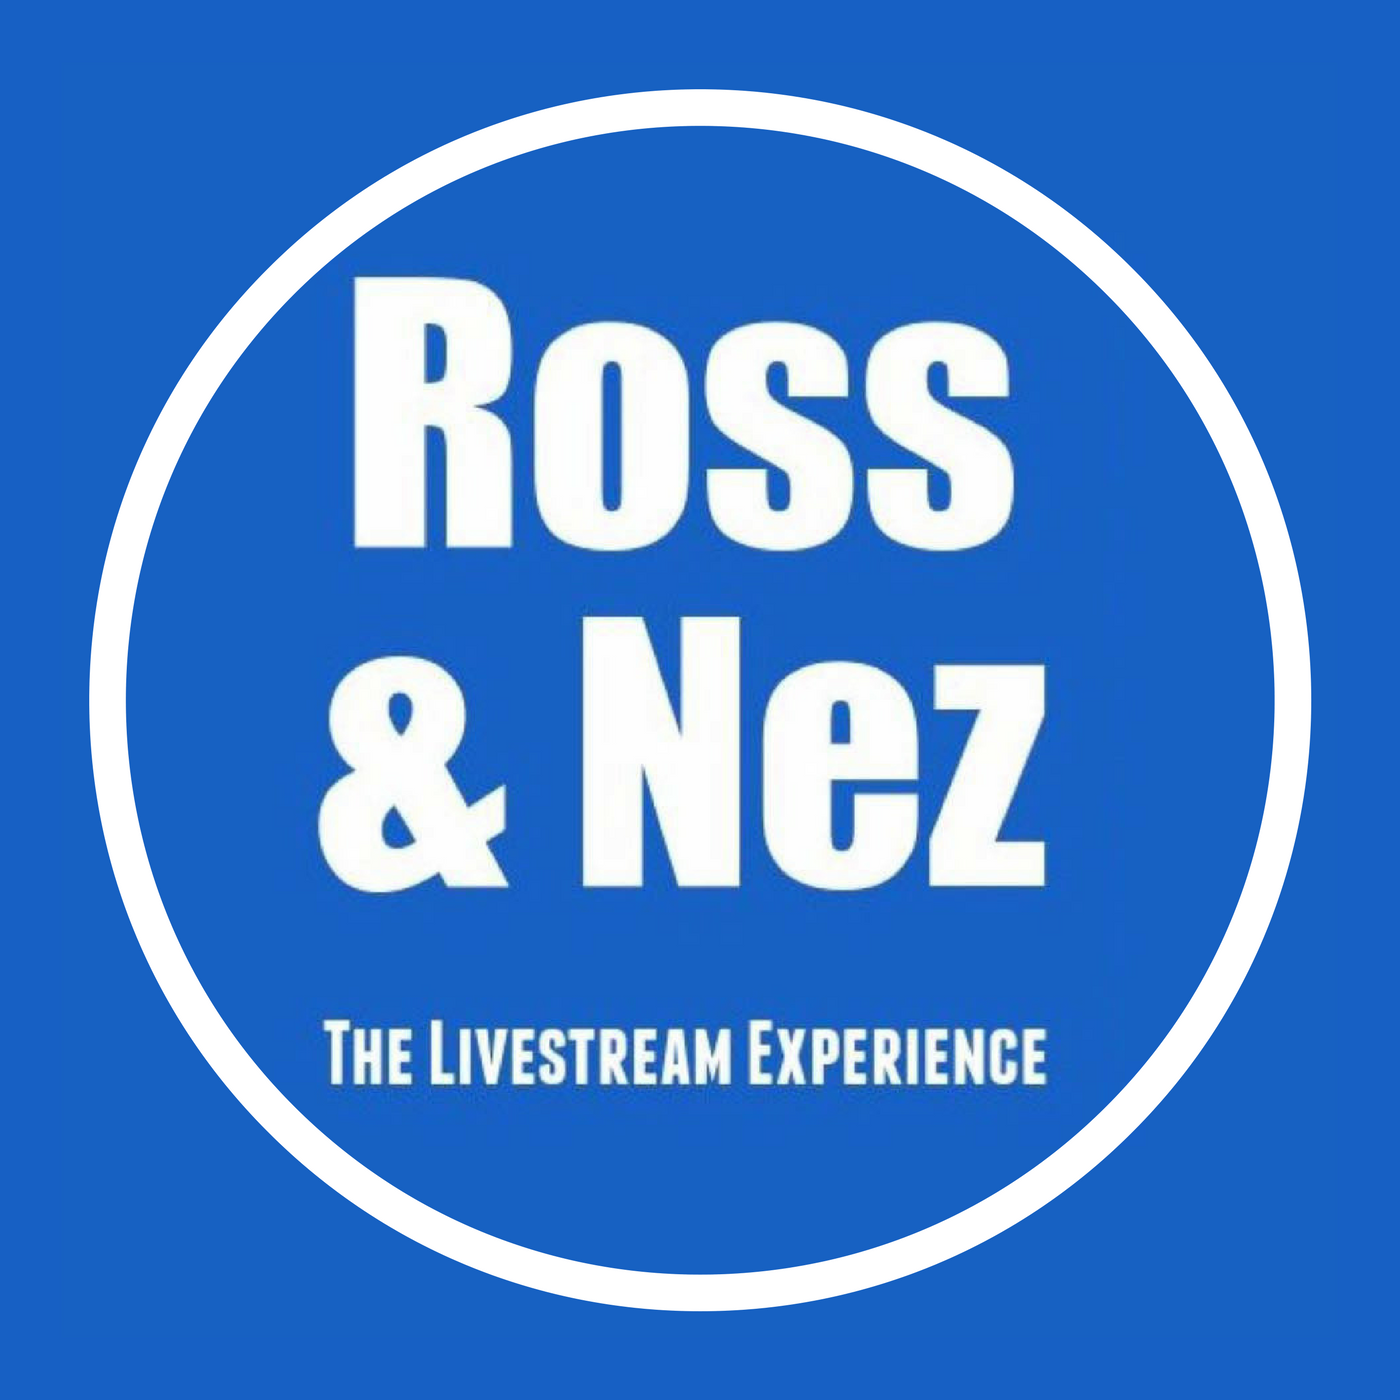 Ross & Nez: The Livestream Experience (Audio)